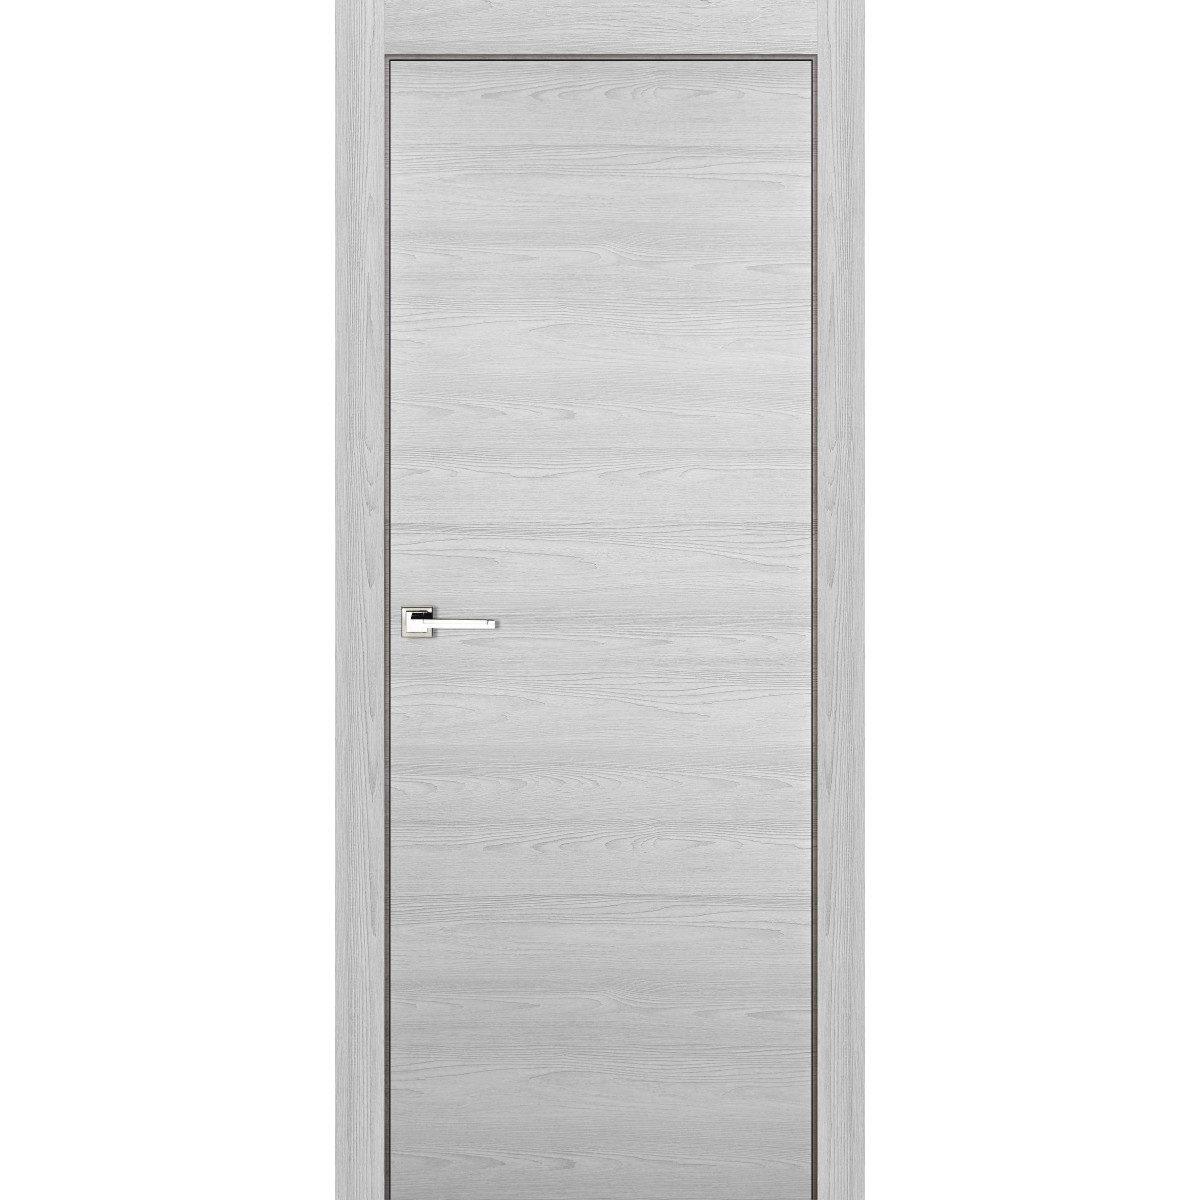 Дверь межкомнатная глухая 80x200 см, ламинация, цвет ясень серый